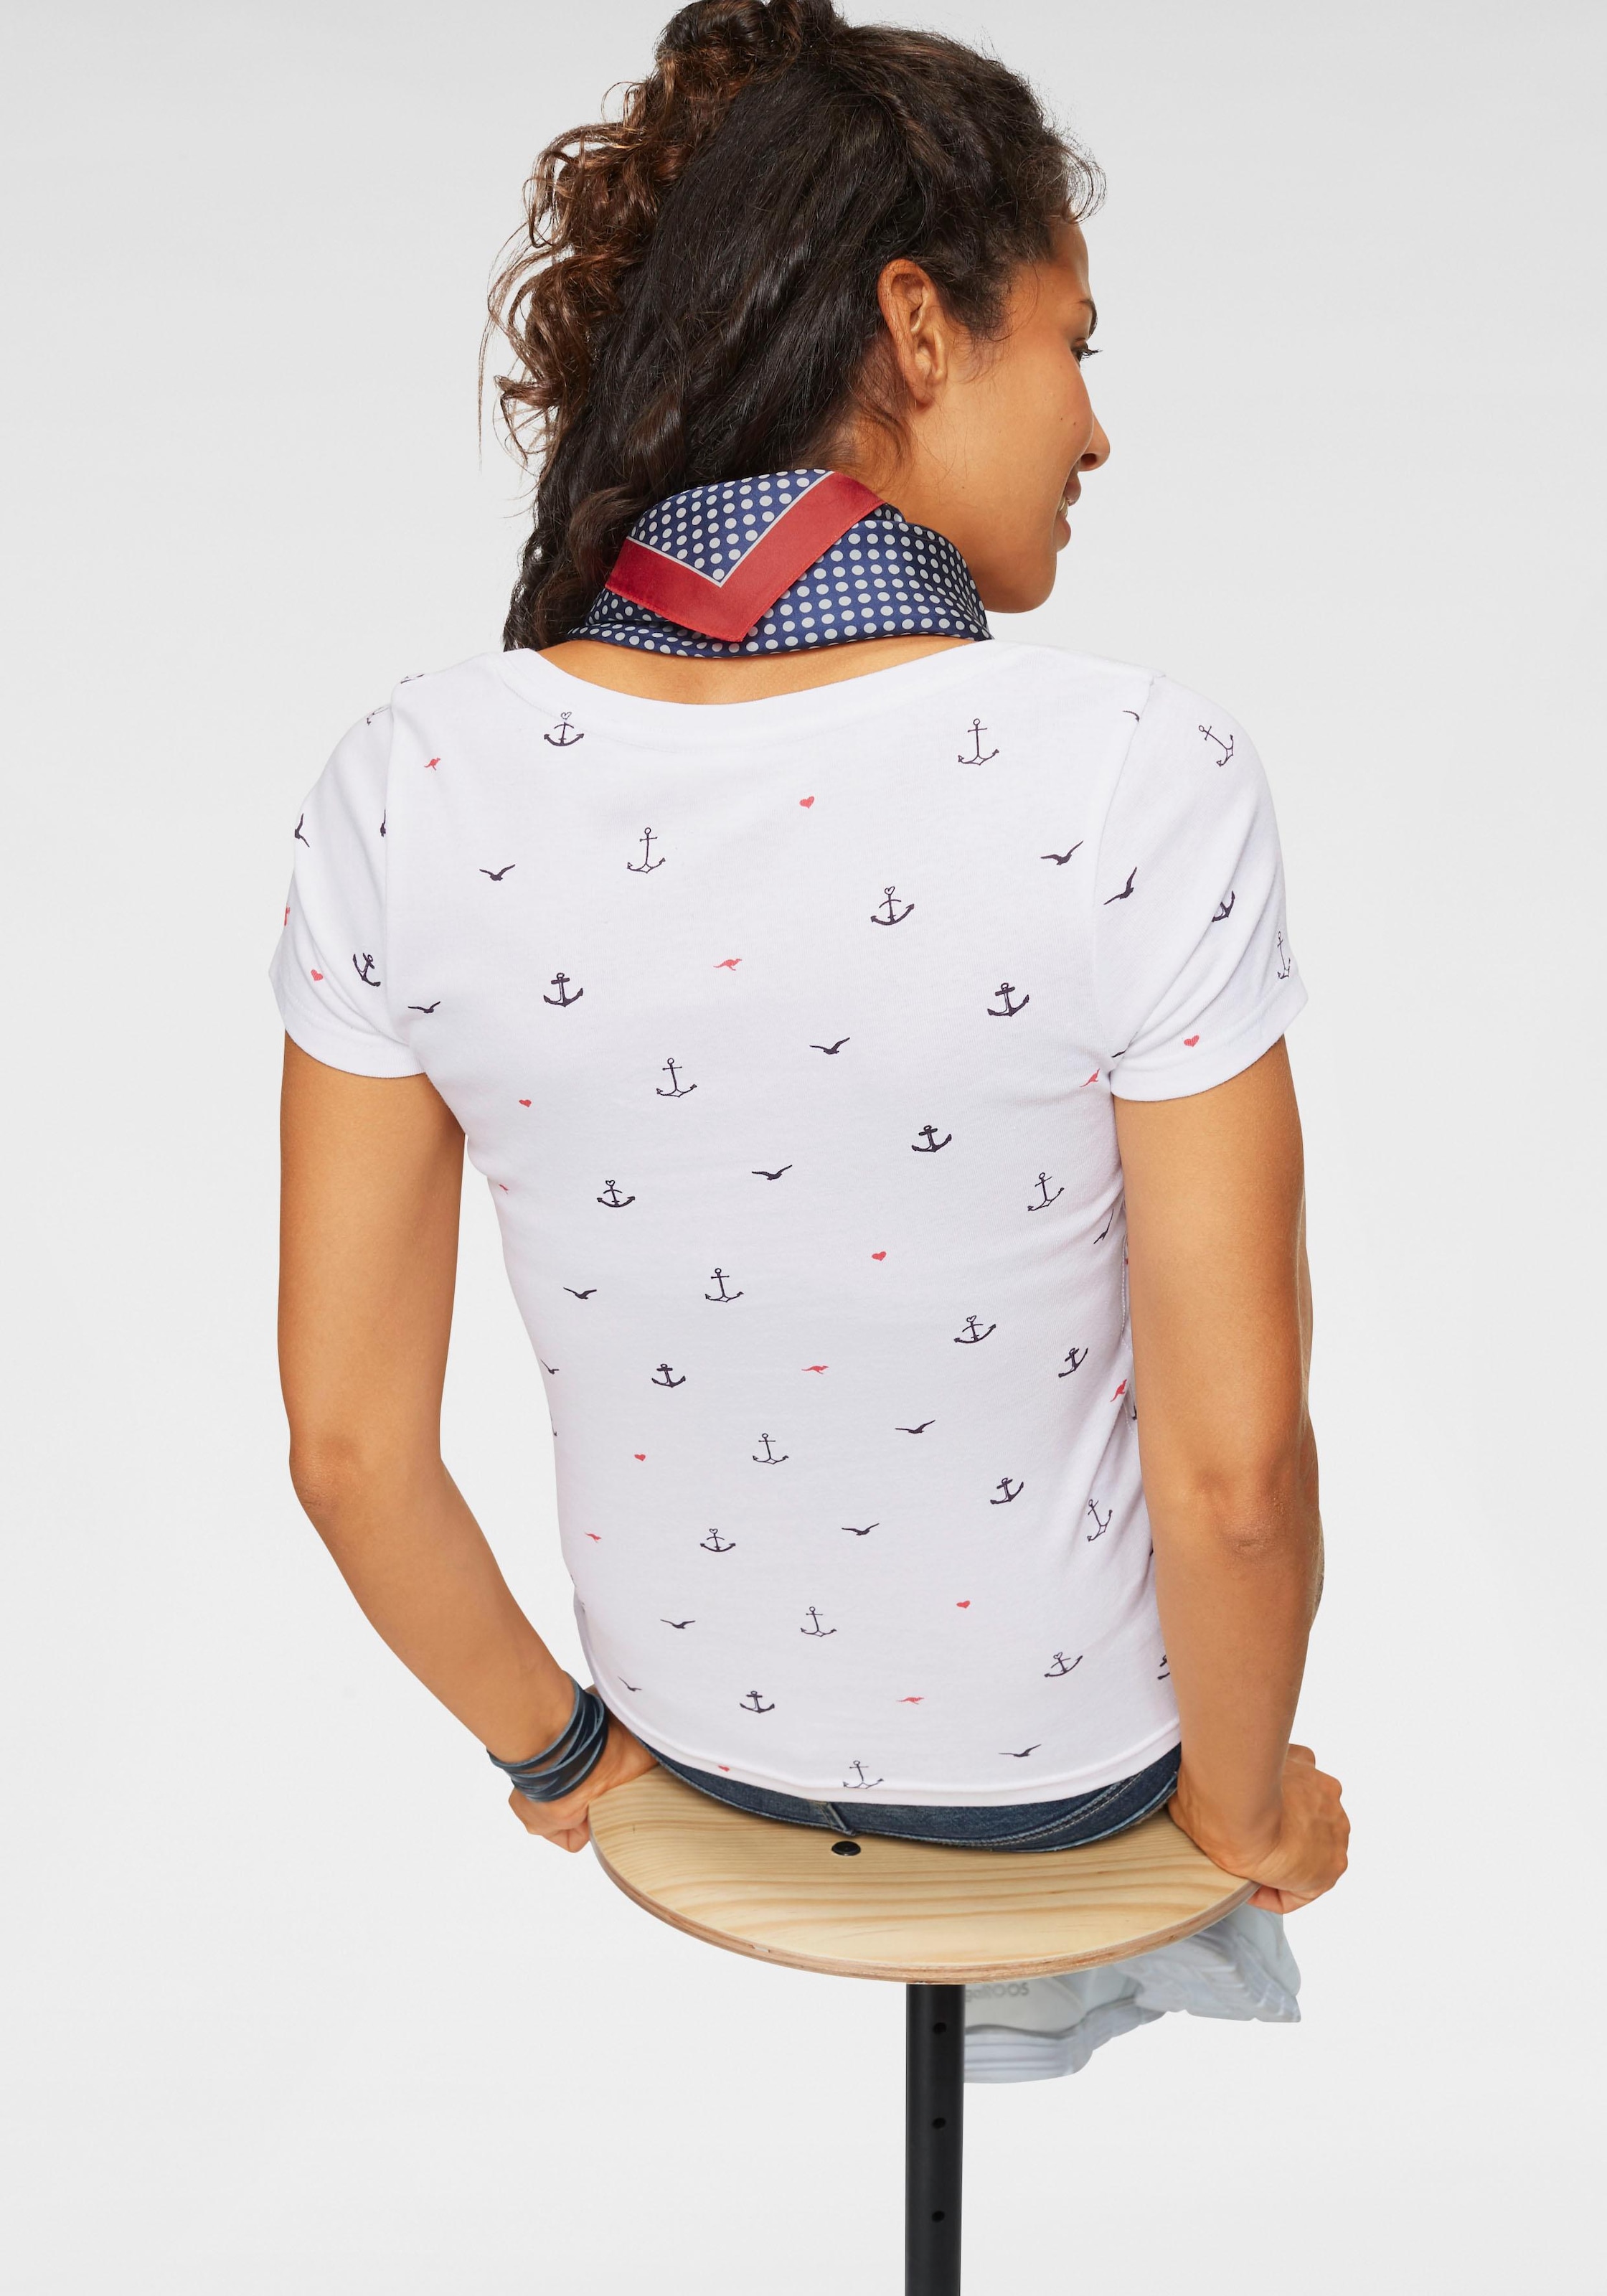 KangaROOS T-Shirt, mit dezent maritimen Alloverprints